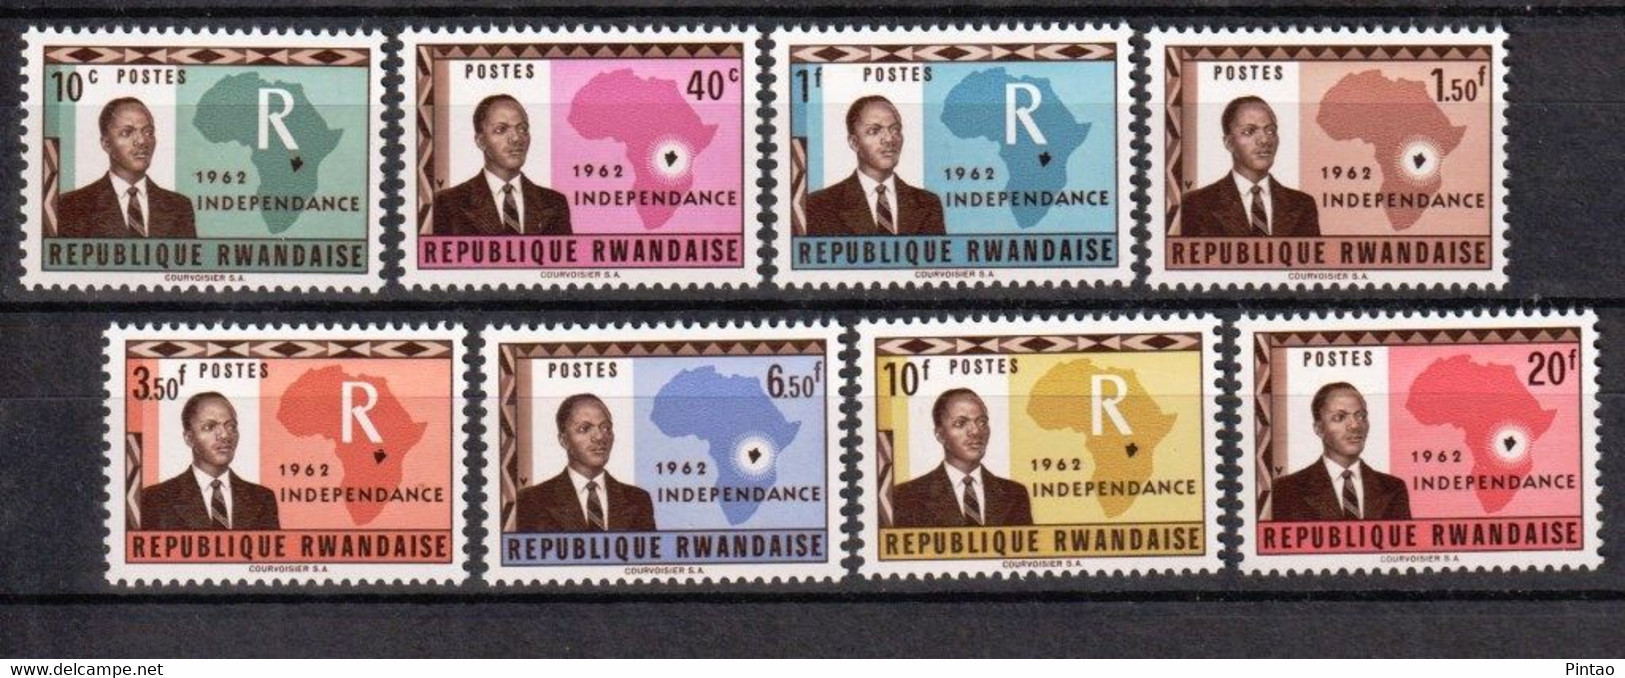 WW11104- RUANDA 1962- MNH (PERSONALIDADES) - Unused Stamps